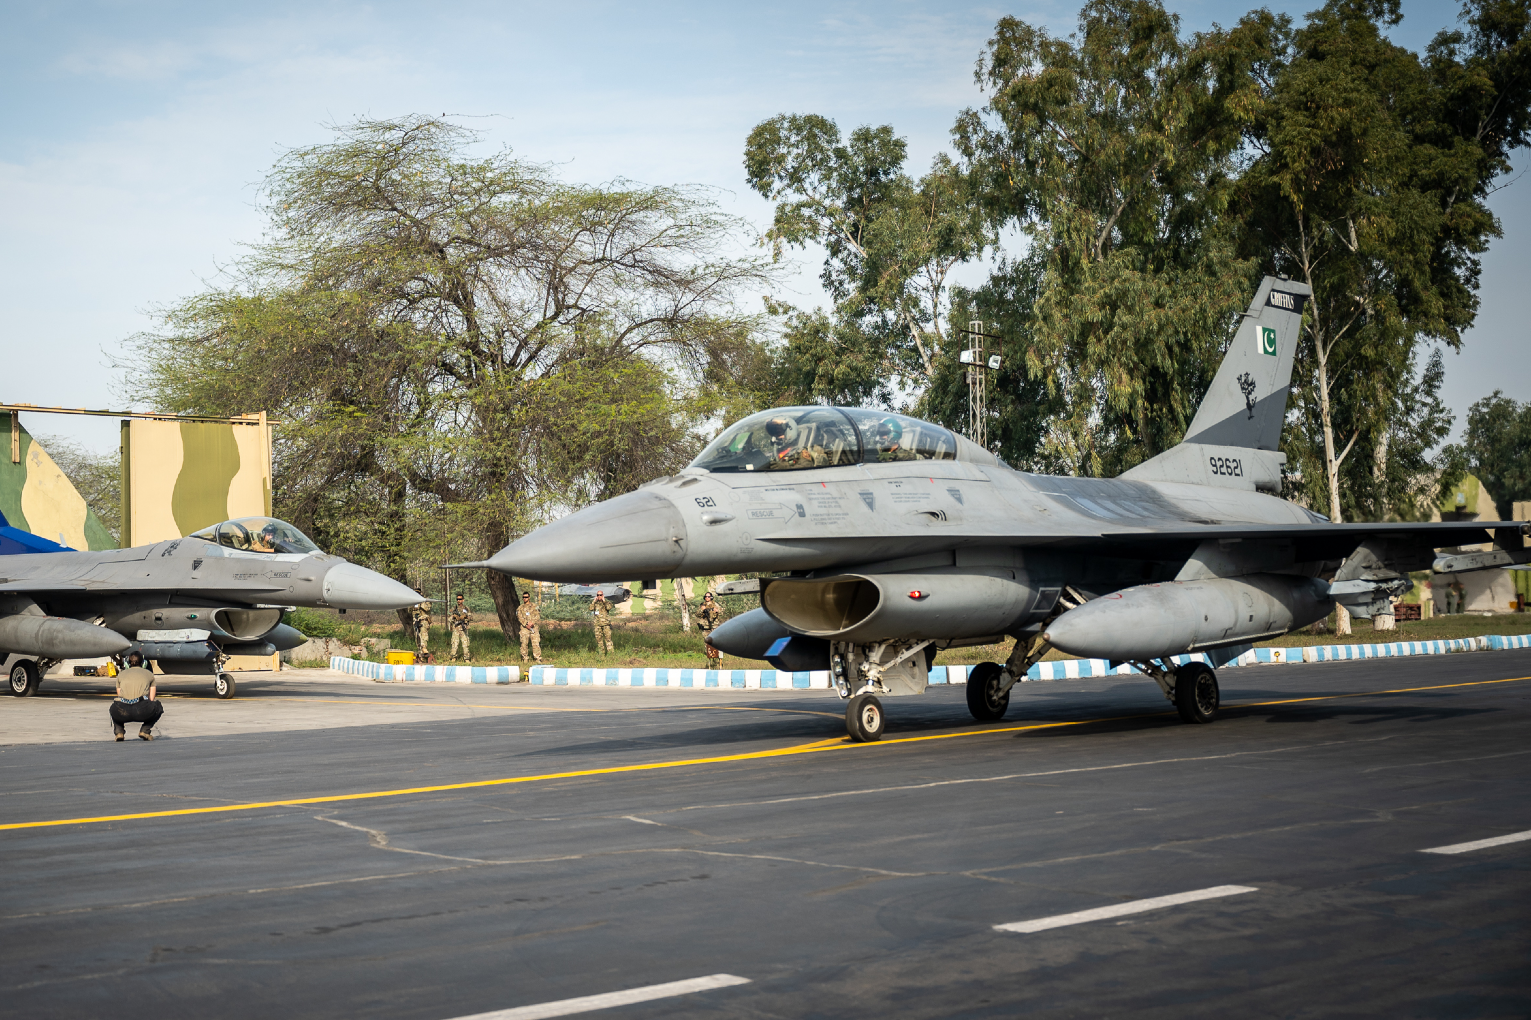 Pakistan Air Force F-16 sits on the tarmac